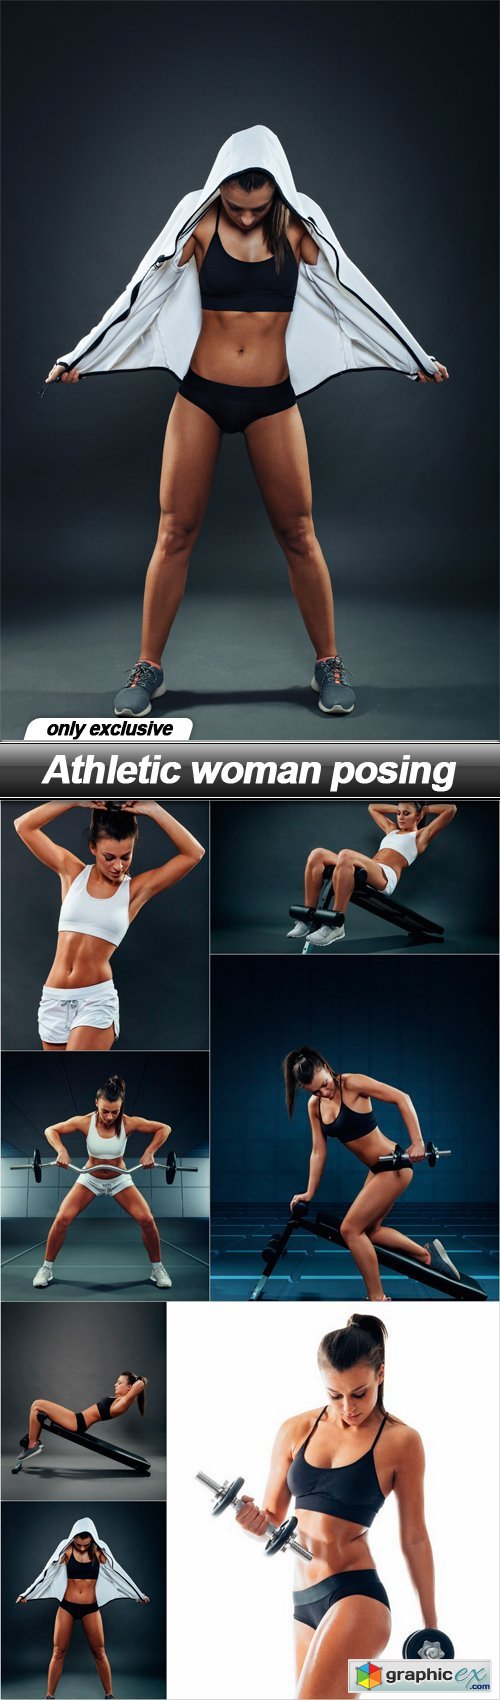 Athletic woman posing - 7 UHQ JPEG